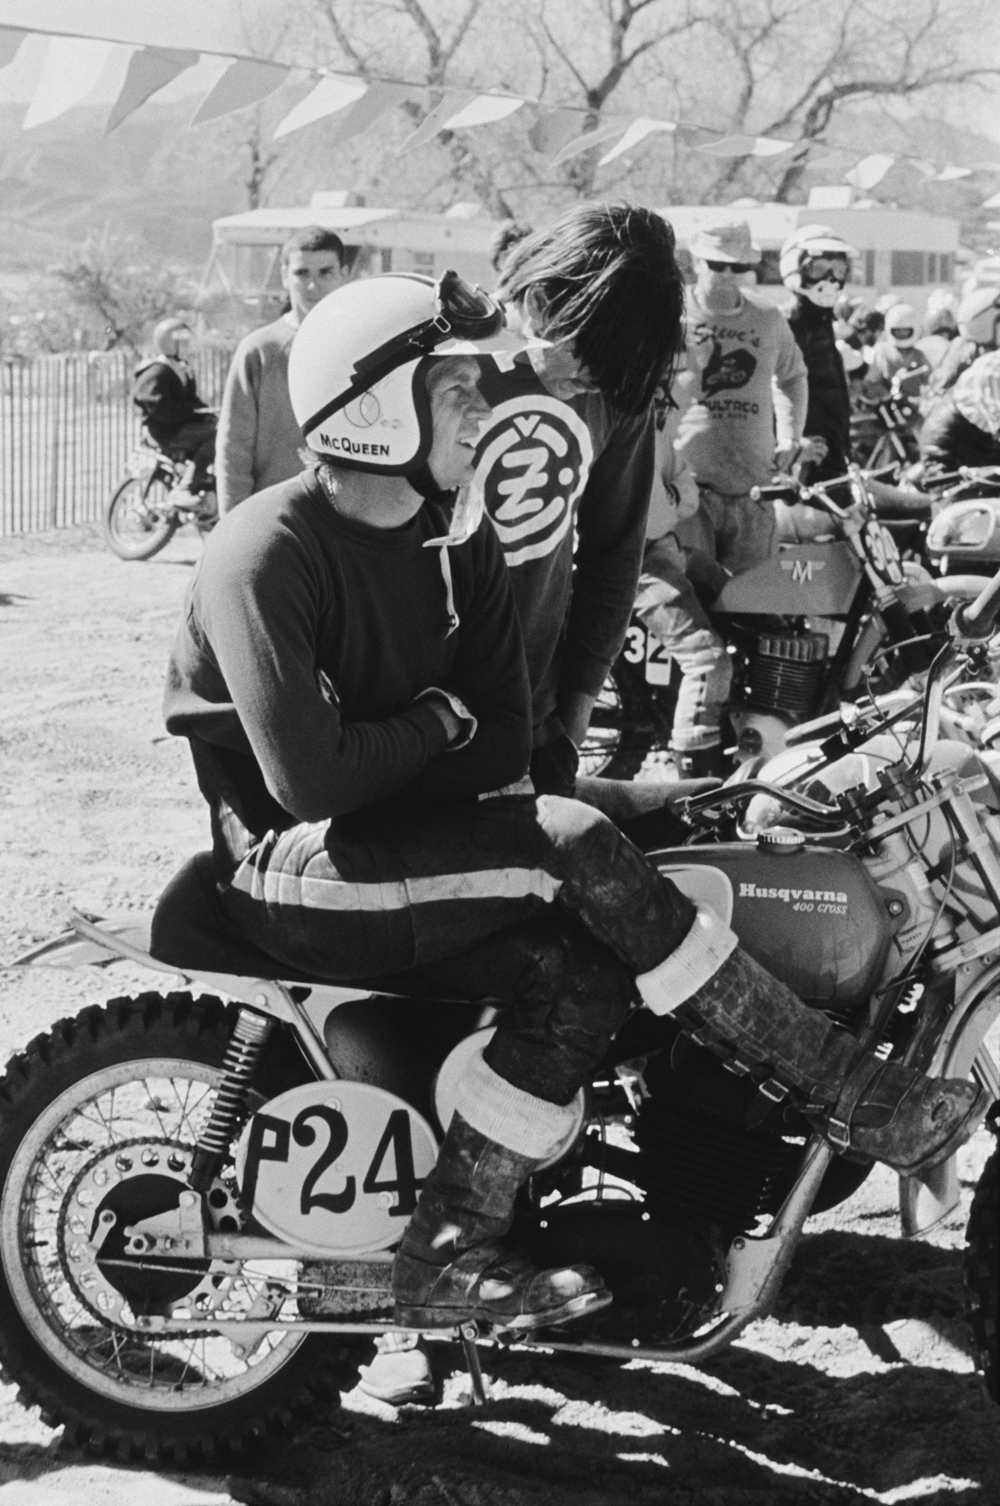 Steve McQueen in racing attire sitting on motorcycle